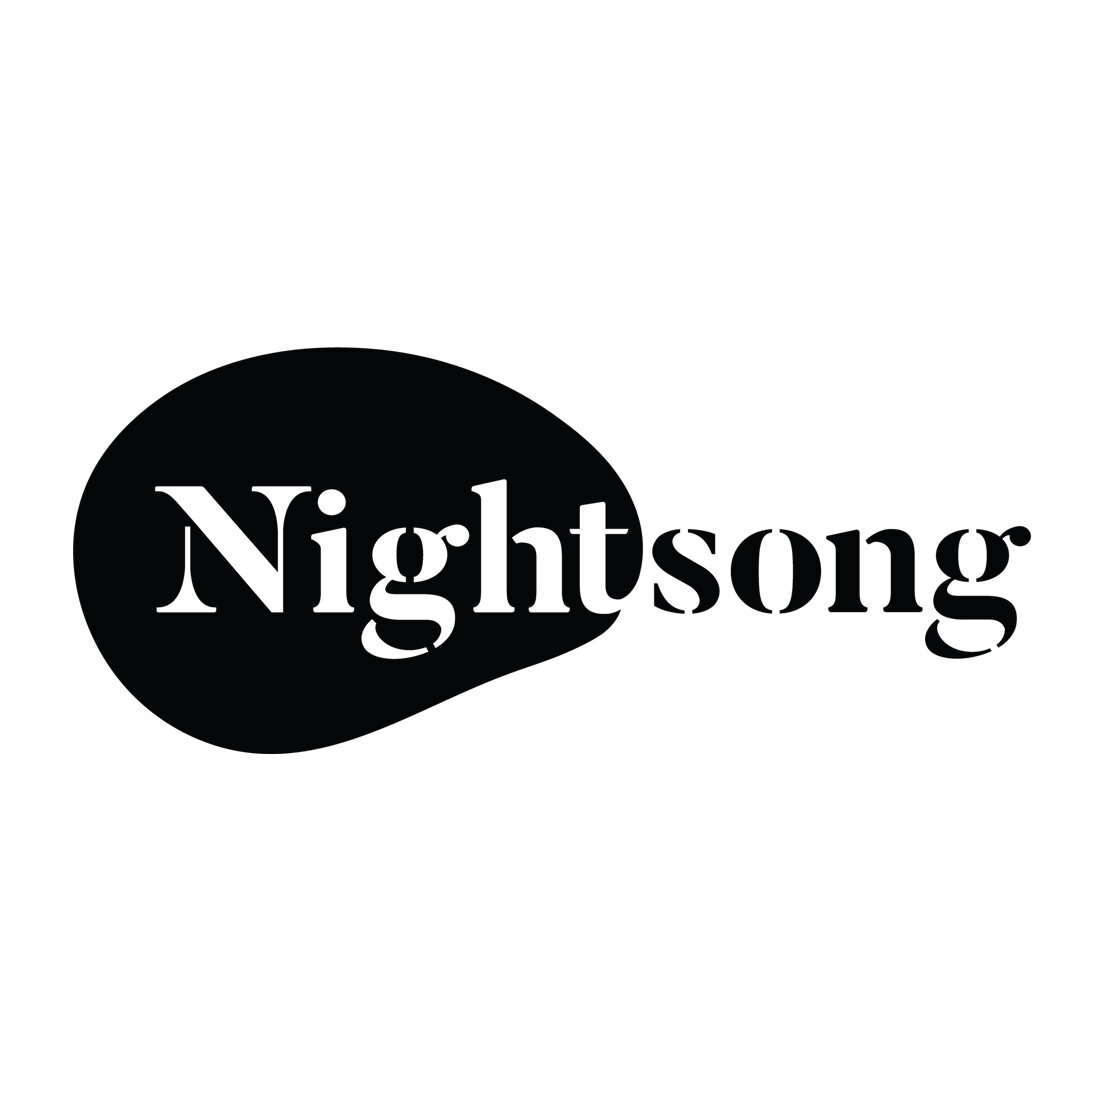 nightsong-logo-black-1100.jpg